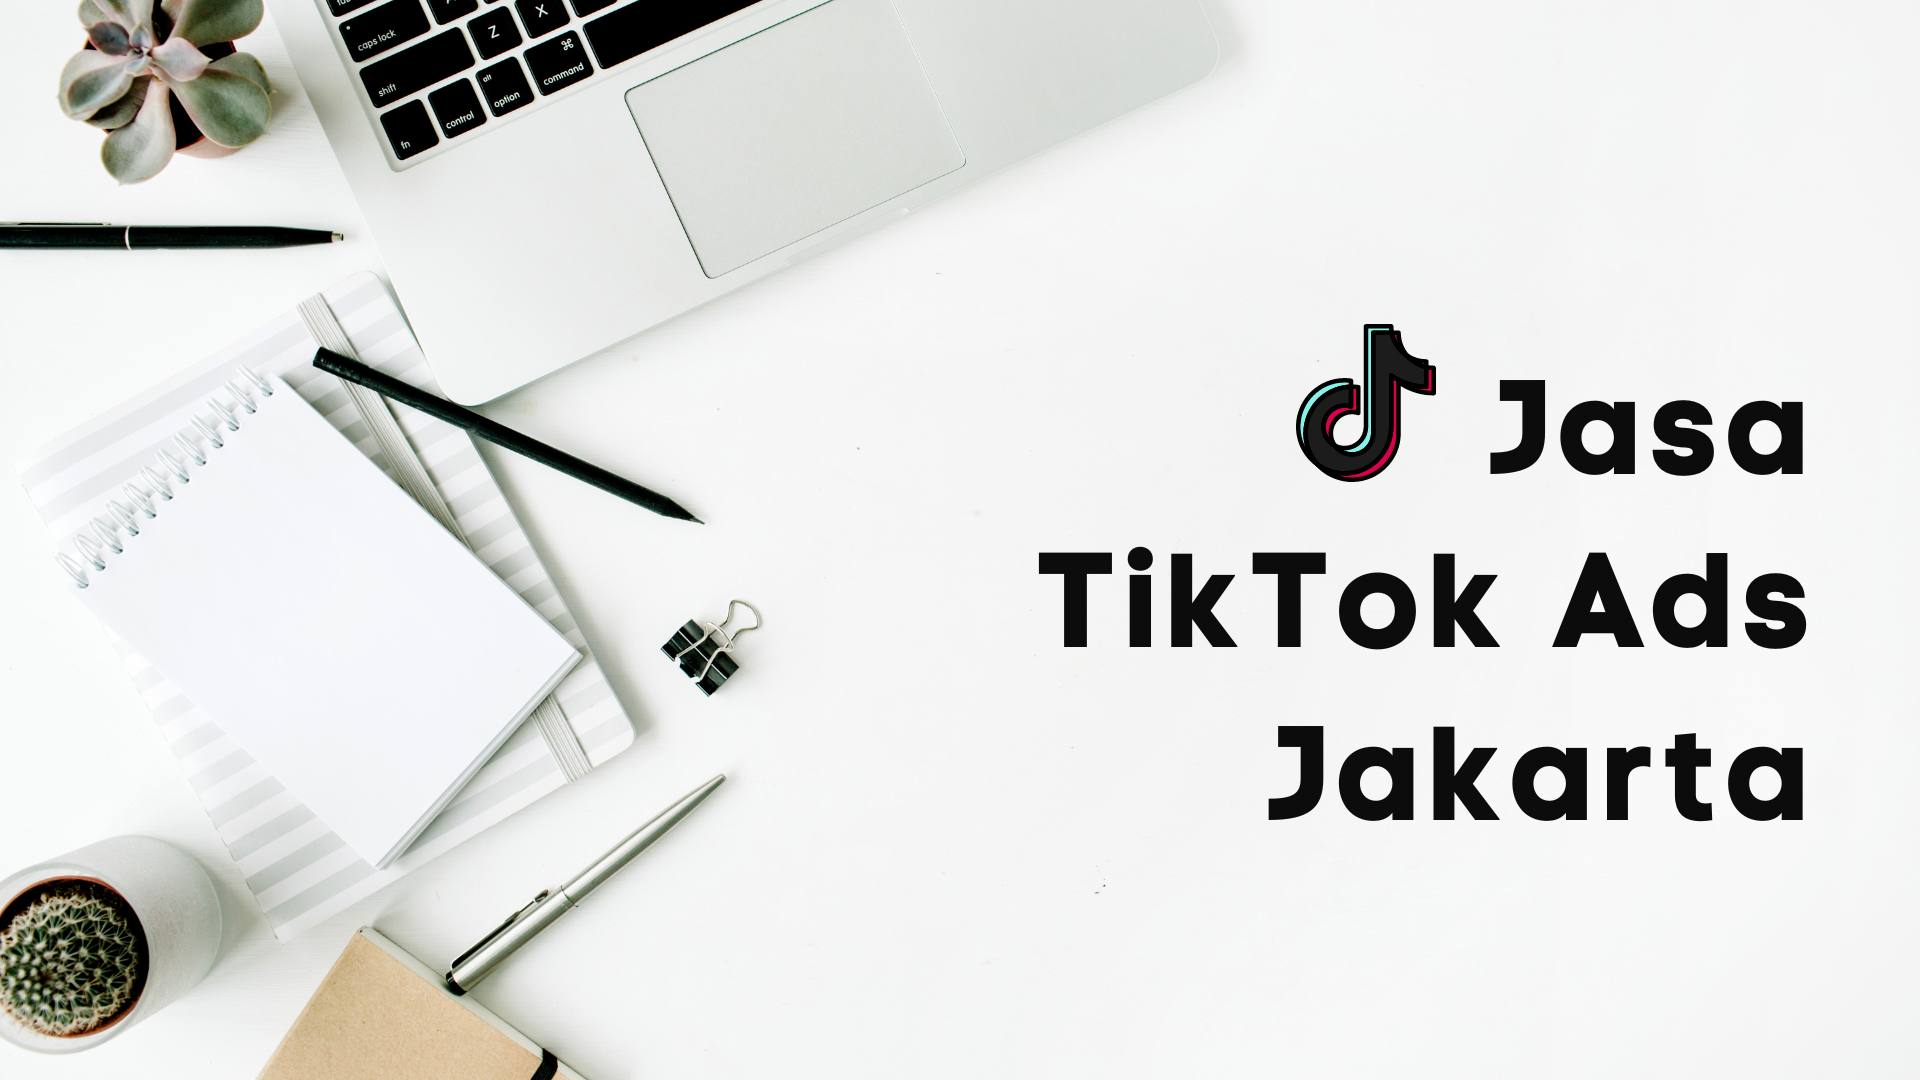 Jasa TikTok Ads Jakarta